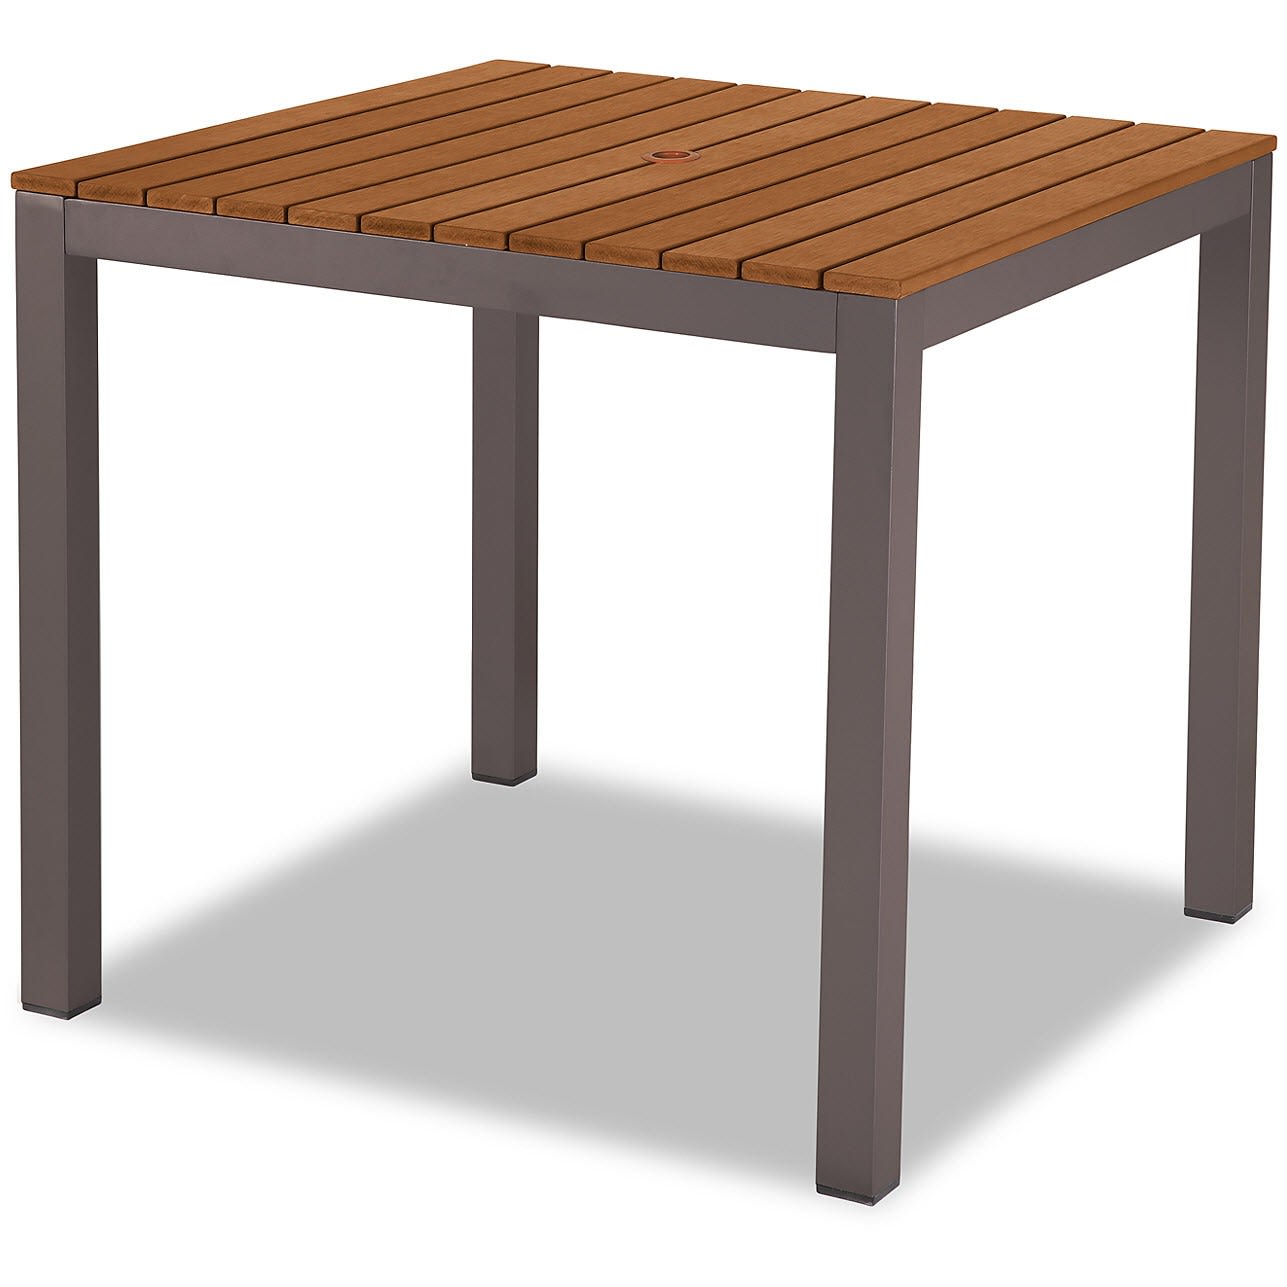 Aluminum Patio Table in Rust Color Finish with Plastic Teak Slats